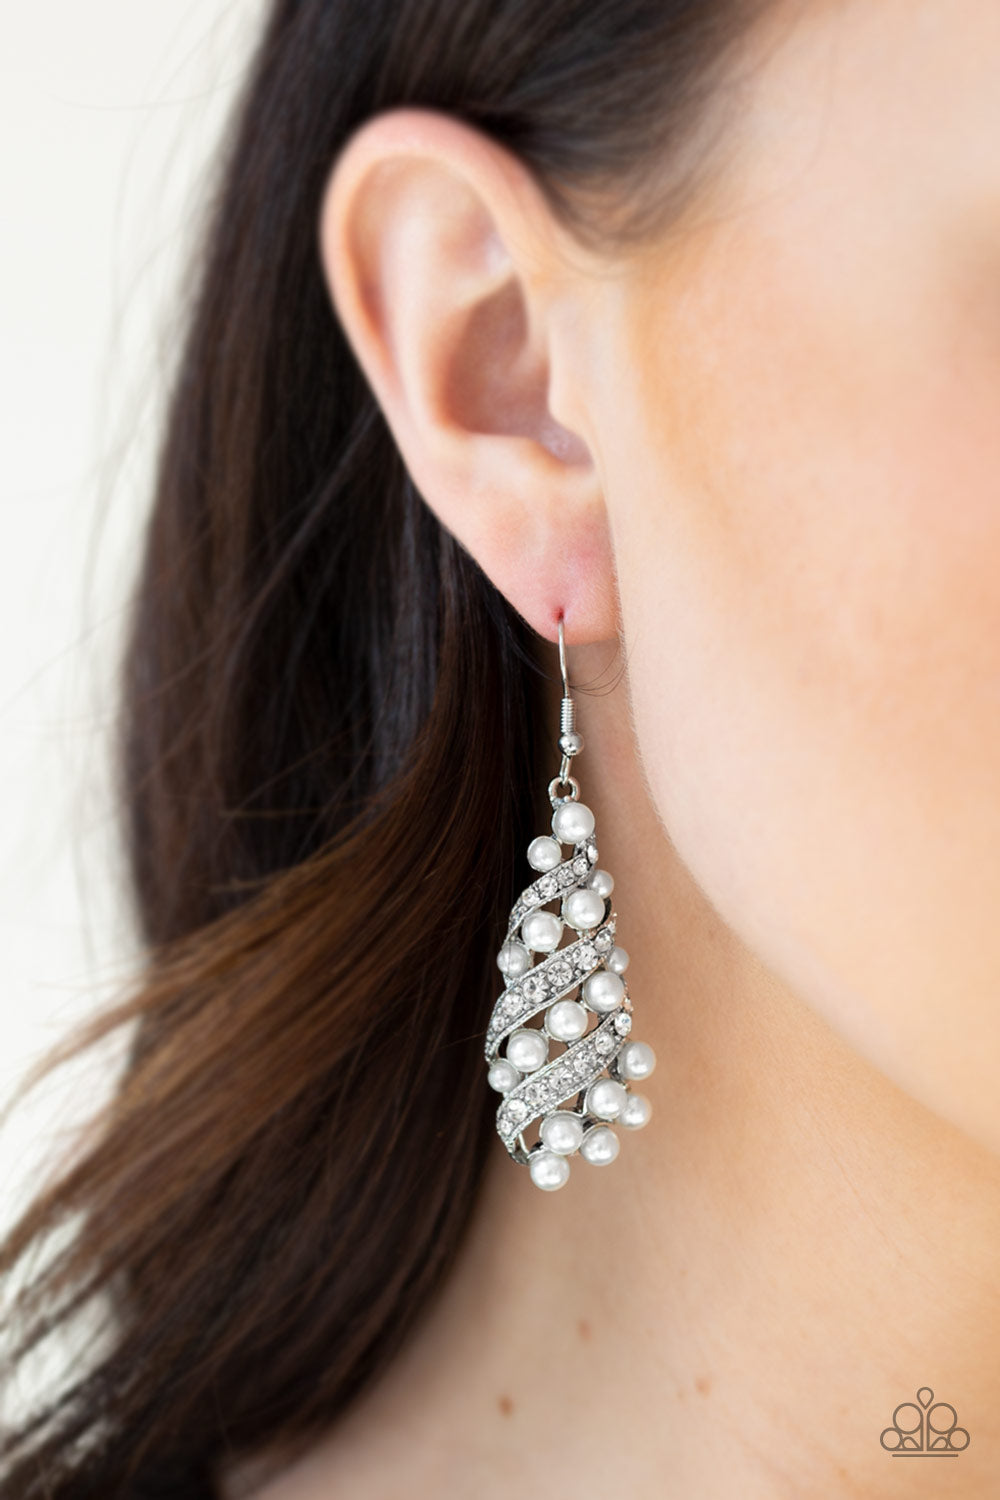 Paparazzi Ballroom Waltz - White Pearls - Teardrop - White Rhinestones - Earrings - $5 Jewelry With Ashley Swint